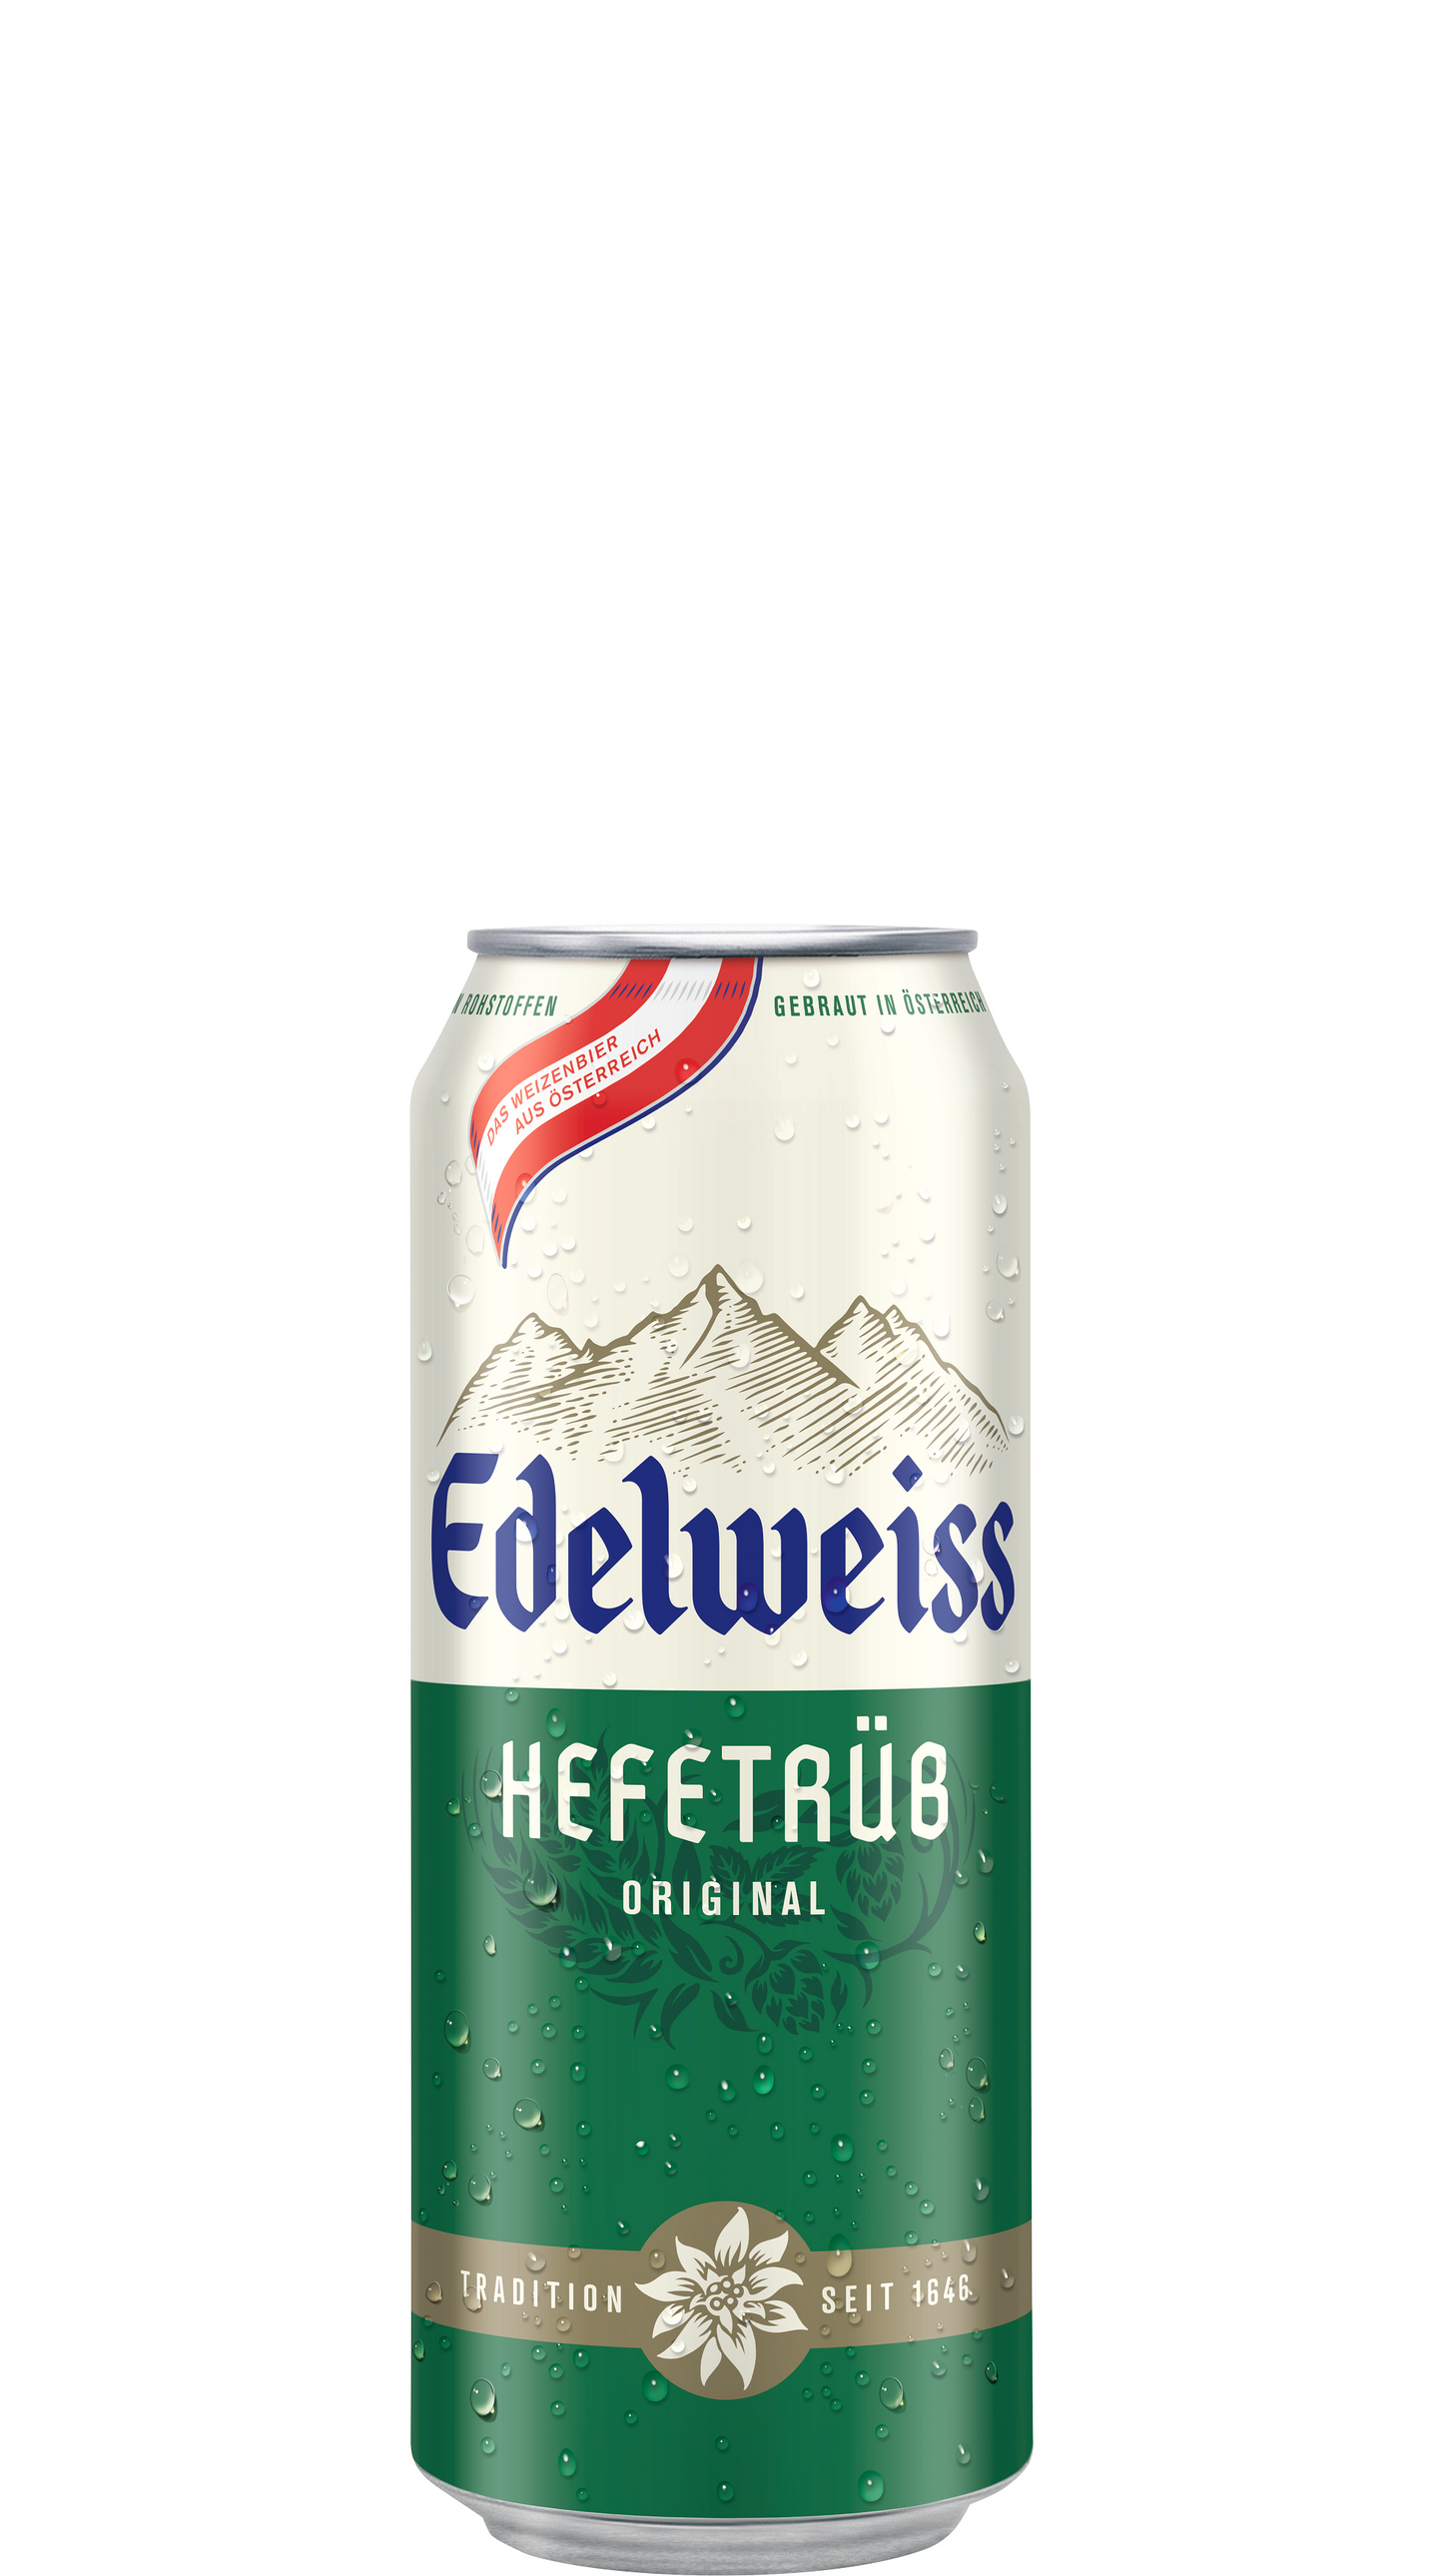 Edelweiss Hefetrüb Weizen Beer | 500ml Can | Authentic Austrian Wheat Beer